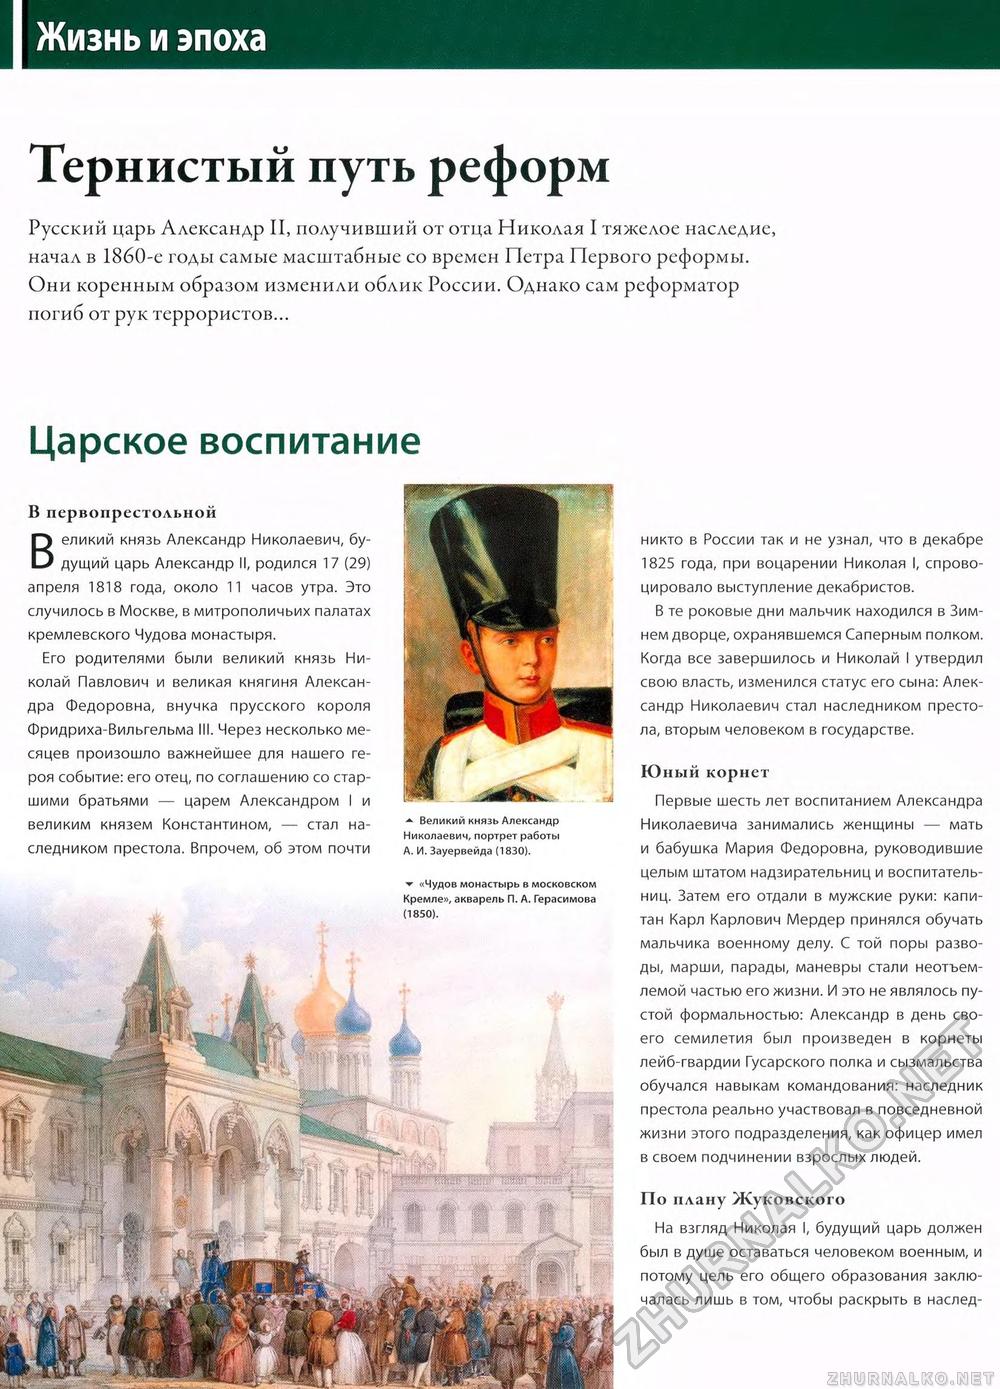 70. Александр II, страница 6